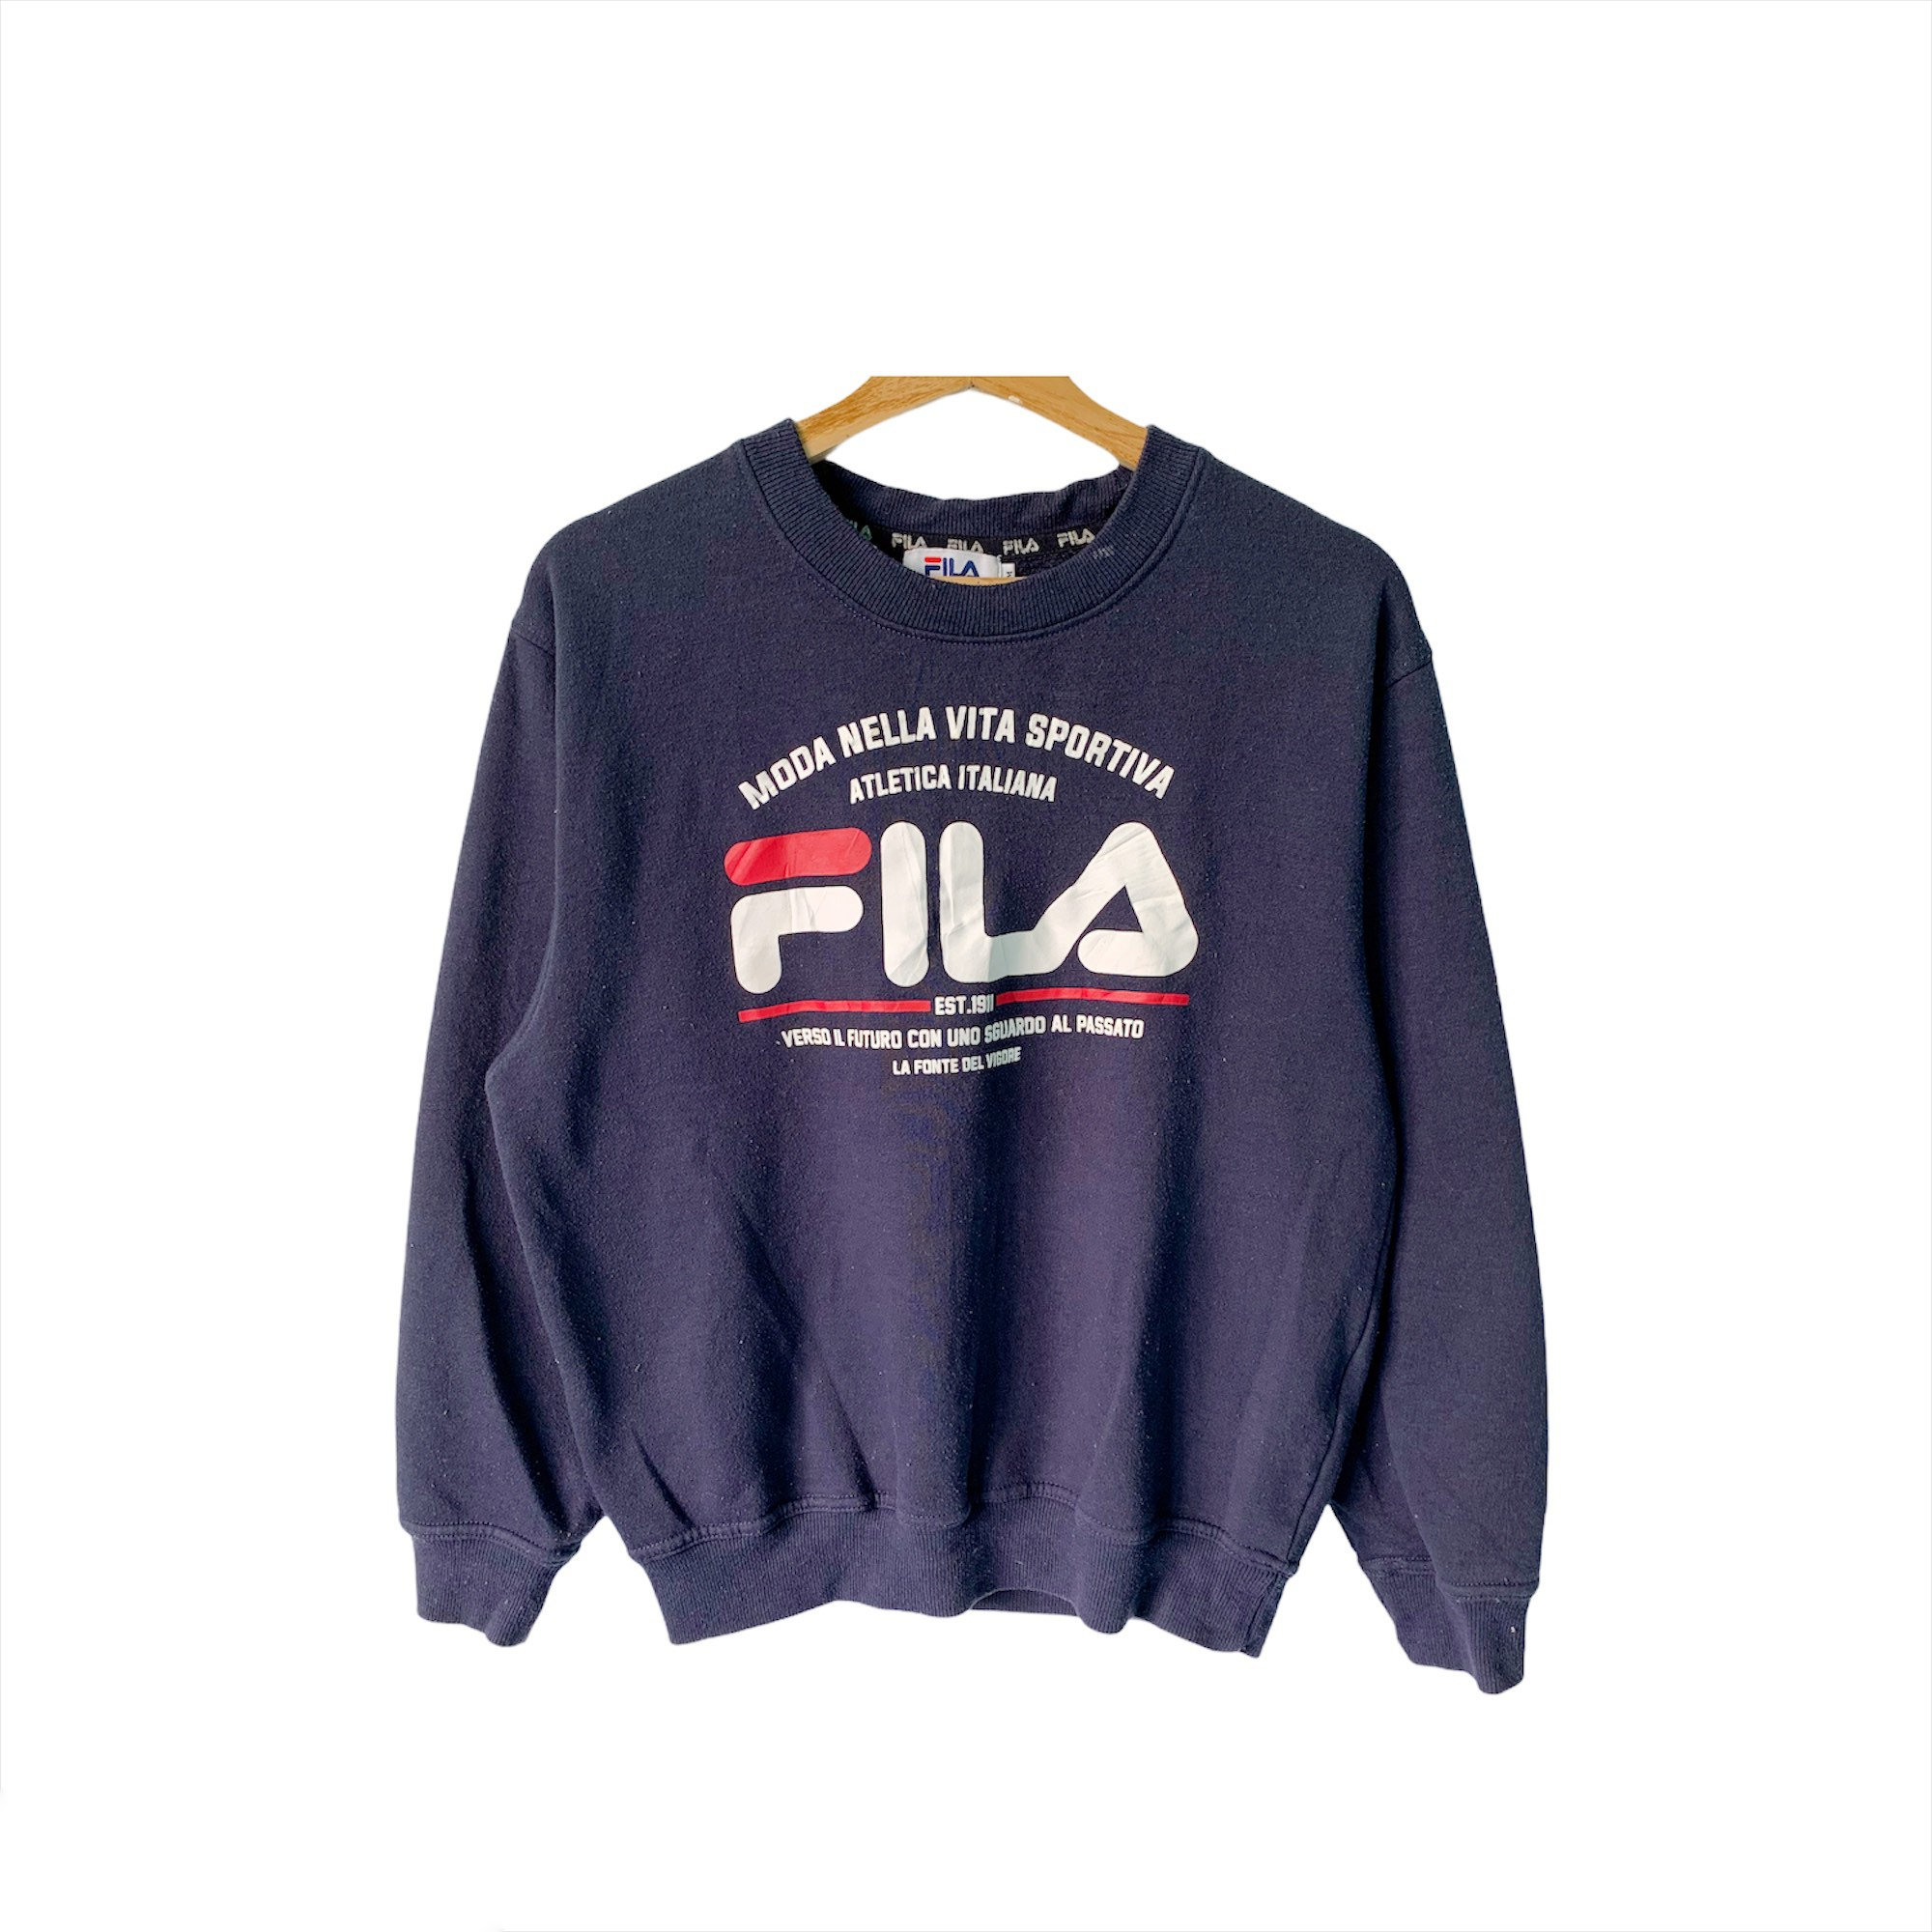 Eenheid geluk periode PICK Vintage Fila Sweatshirt Fila Crewneck Sweater Pullover - Etsy